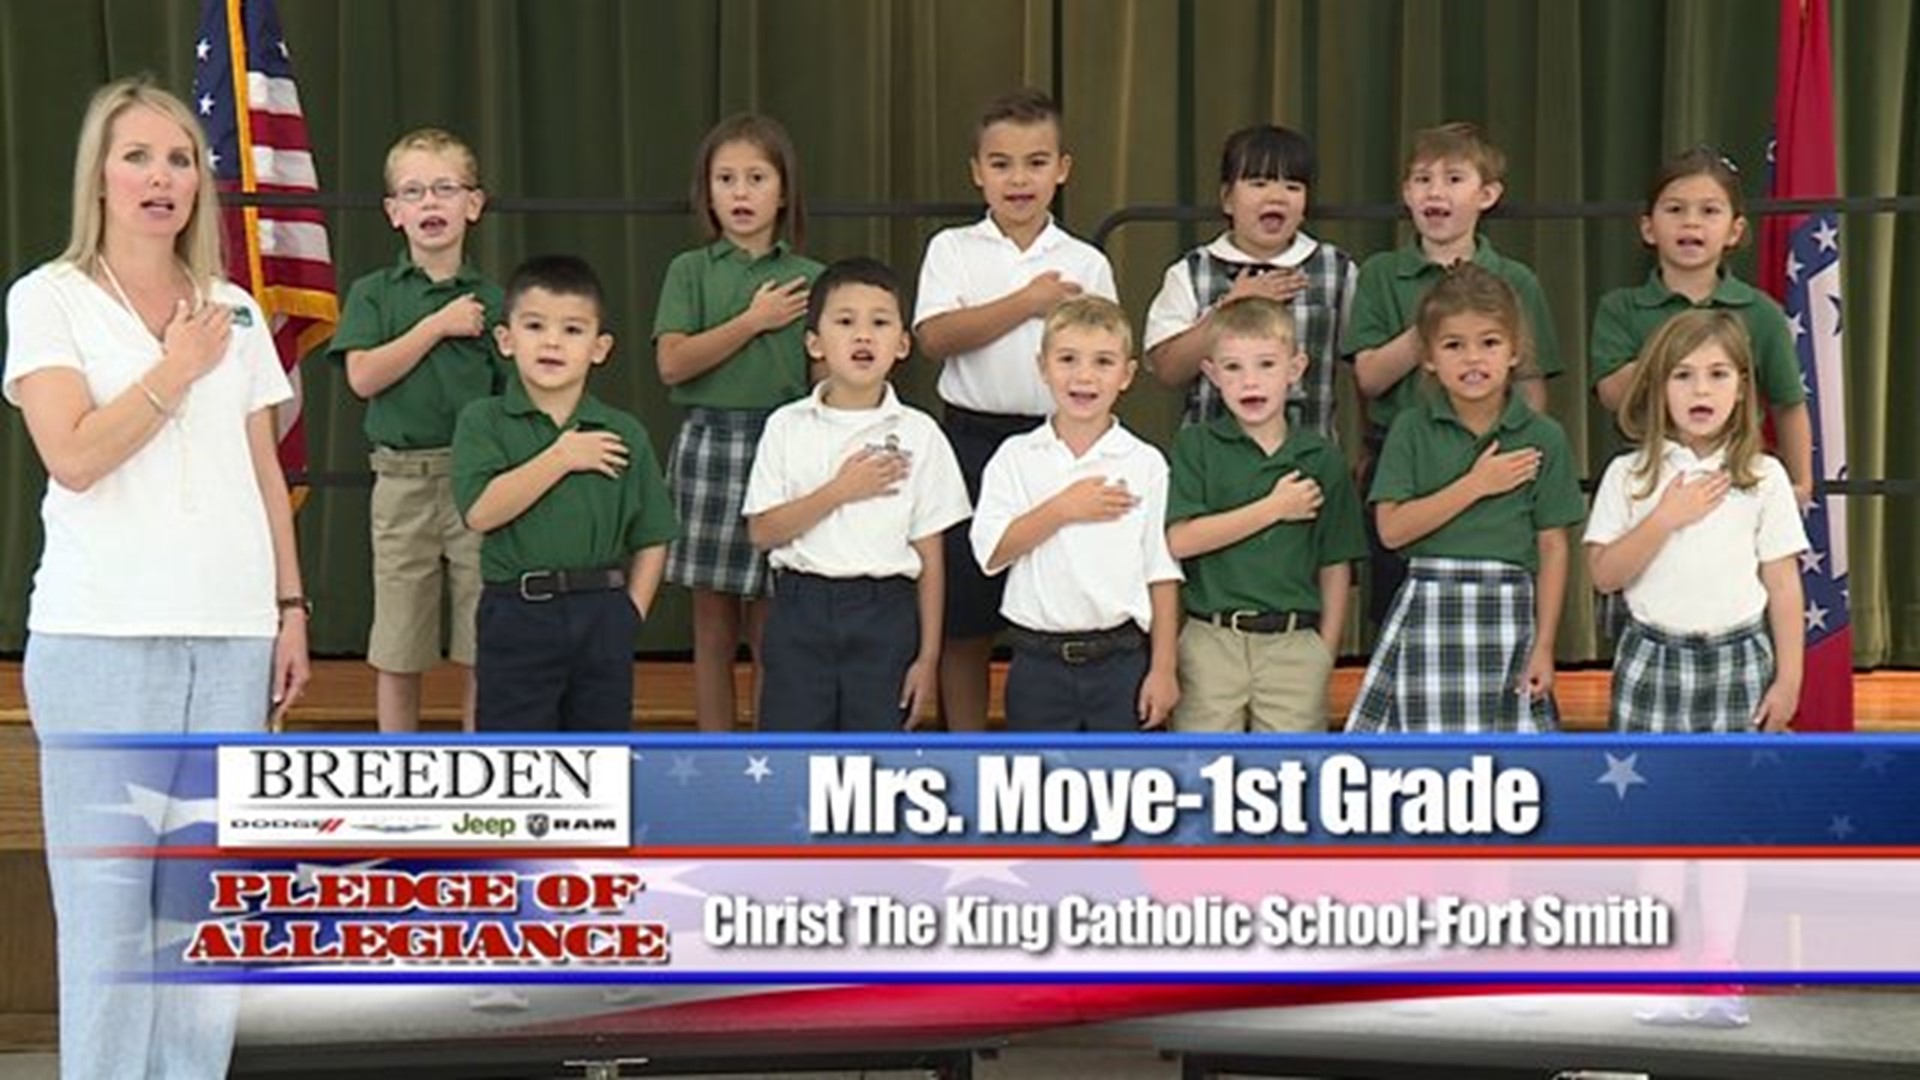 Christ the King Catholic School - Fort Smith - Mrs. Moye - 1st Grade